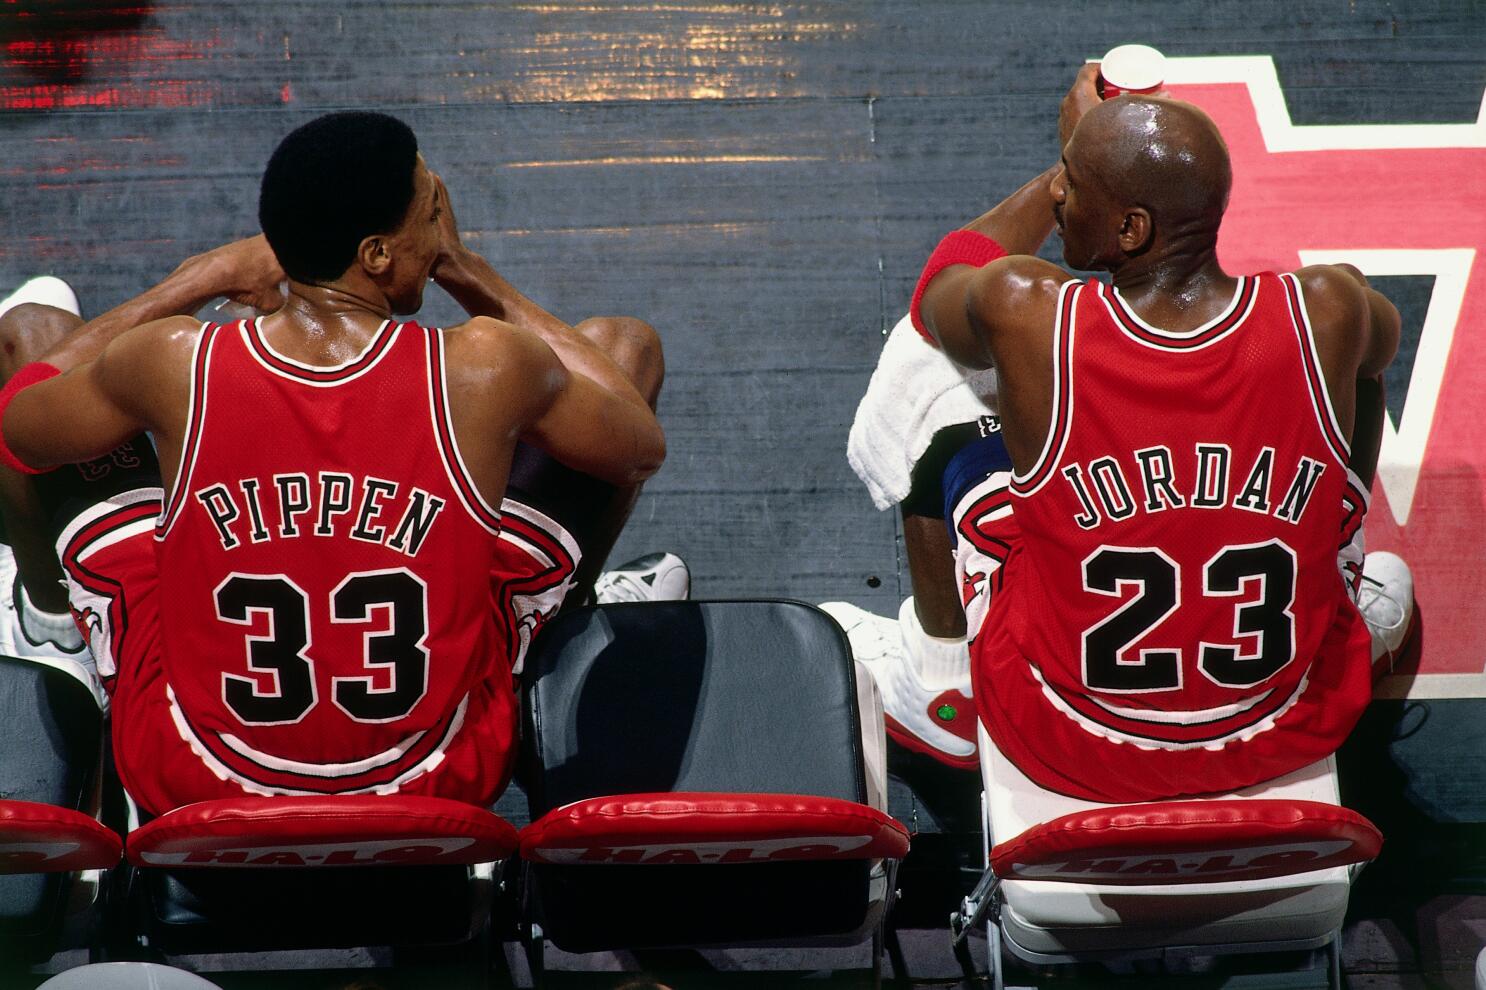 Archive 75: Michael Jordan